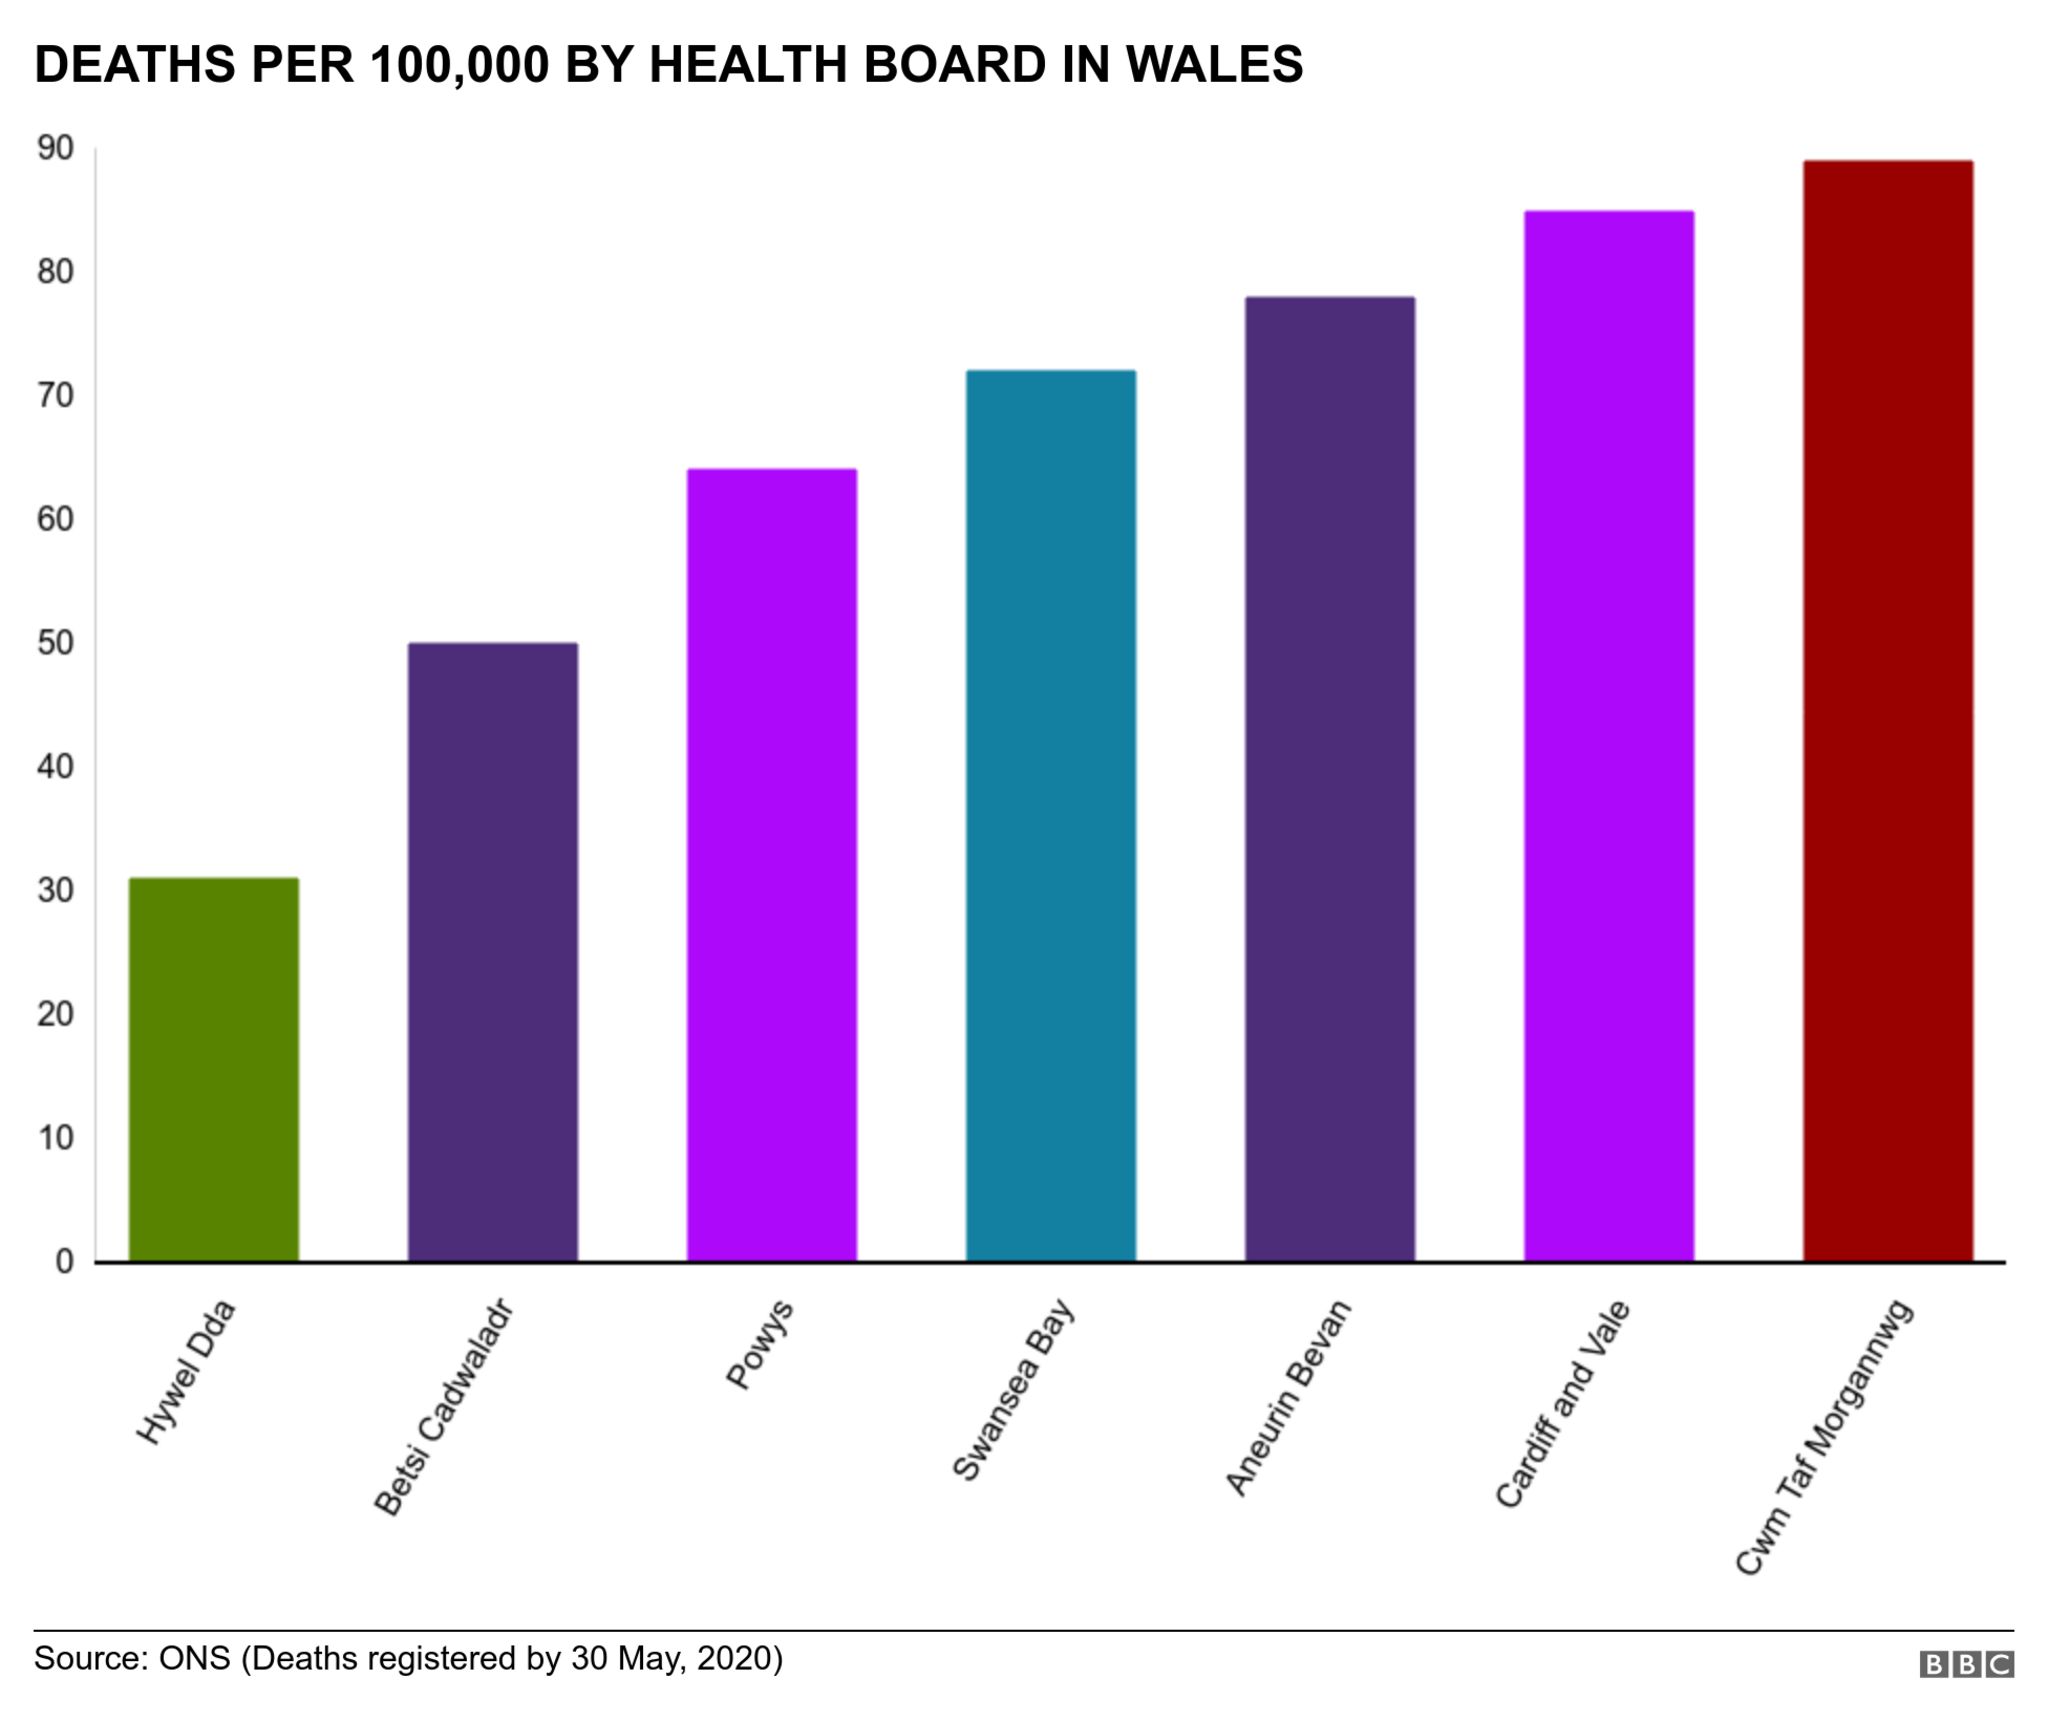 Deaths per 100,000 by health board in Wales